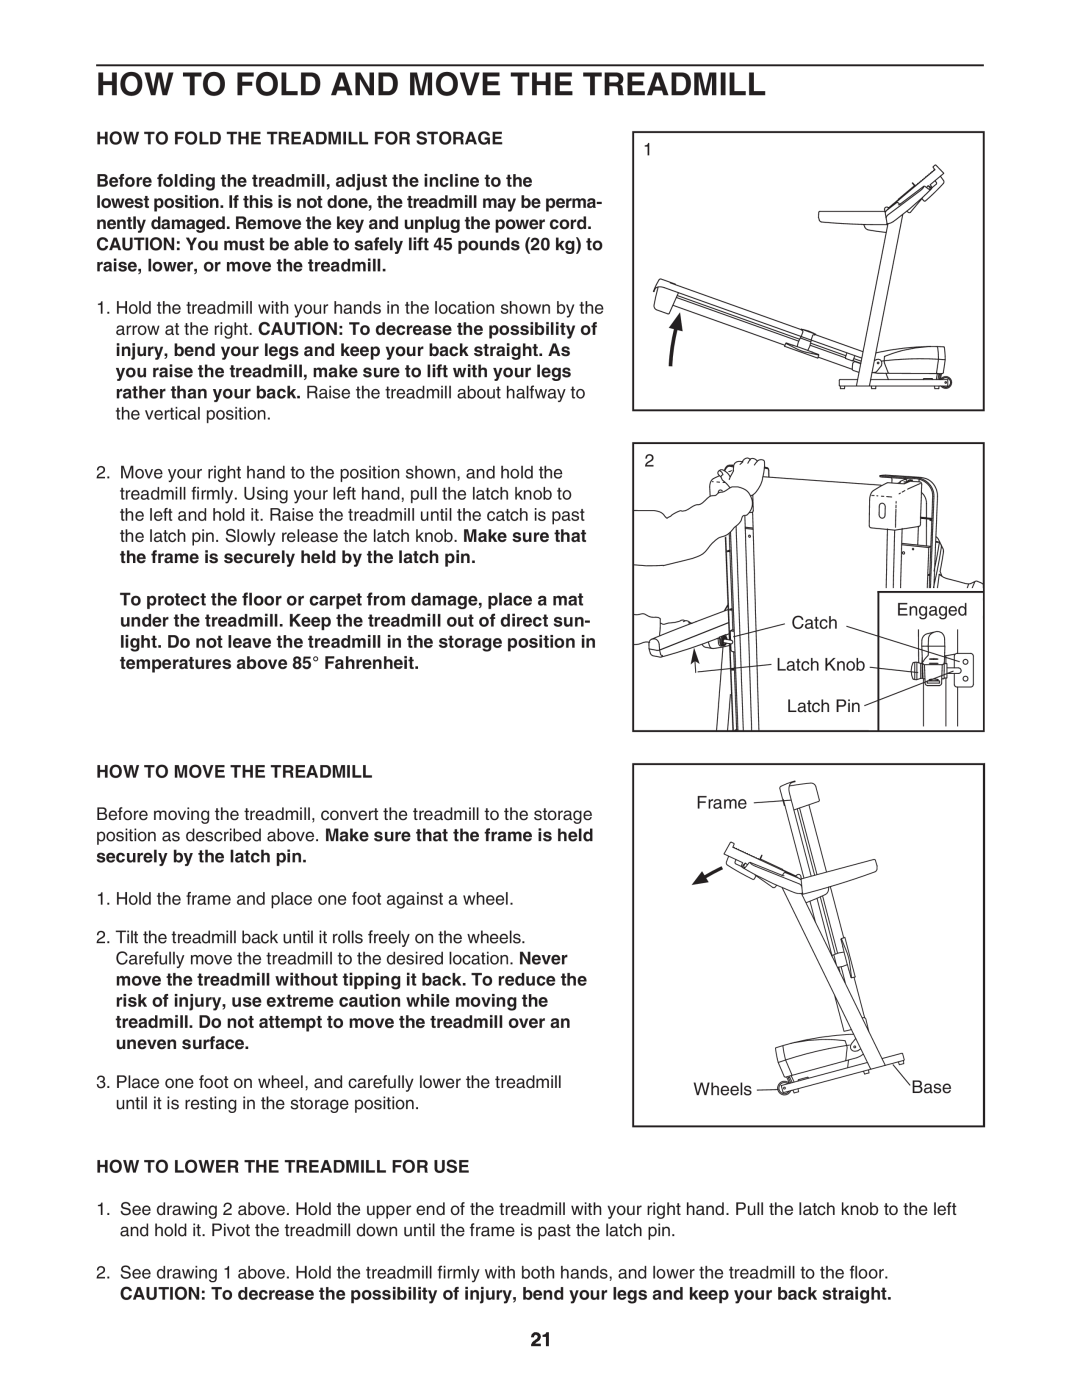 ProForm 831.29605.0 How To Fold And Move The Treadmill, How To Fold The Treadmill For Storage, How To Move The Treadmill 